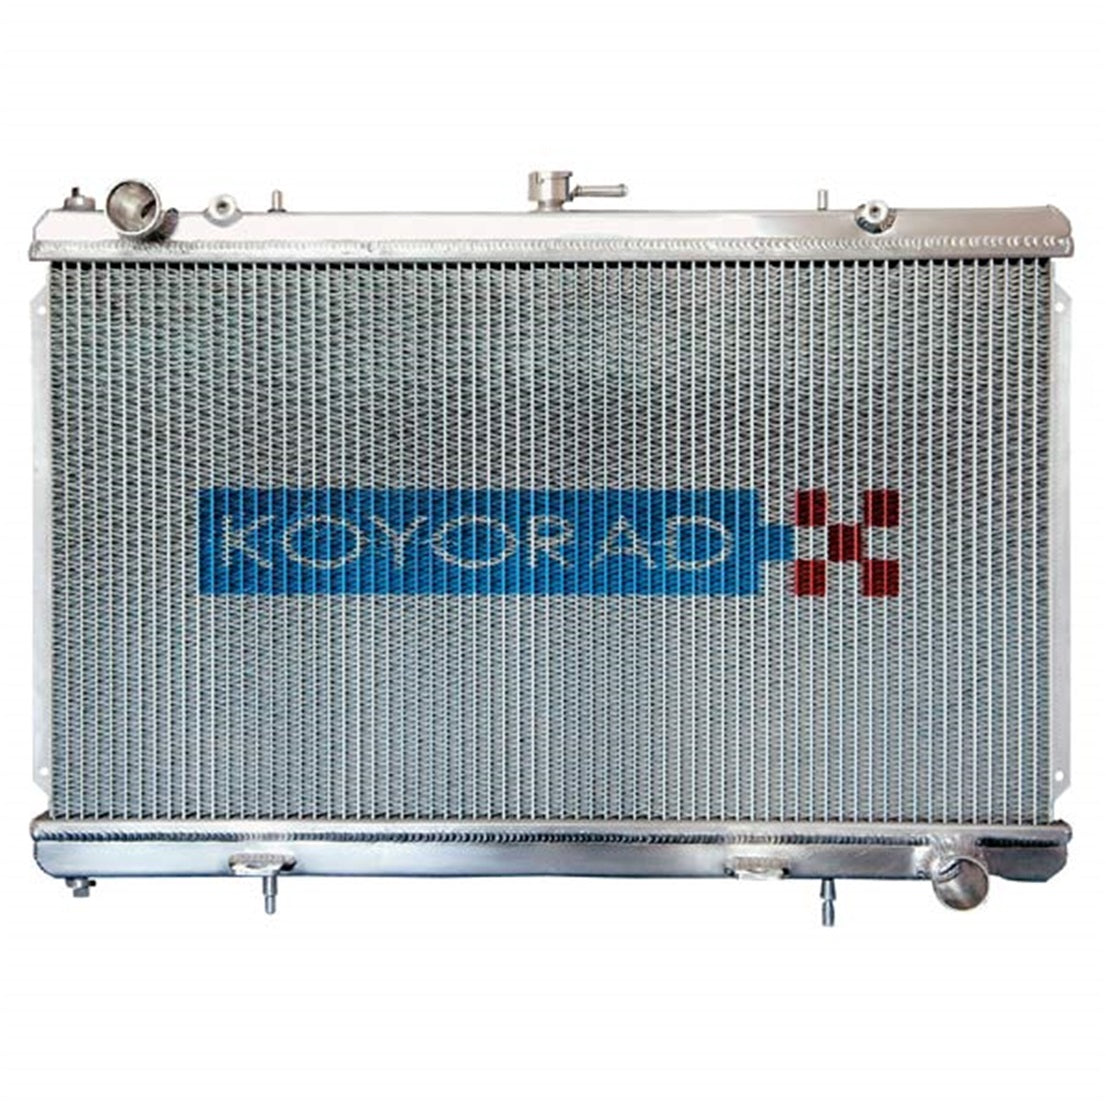 Koyorad Aluminum Radiator (53mm Core) - Mazda MX5 NB 1.8L 99-05 (B6-ZE-BP-ZE)